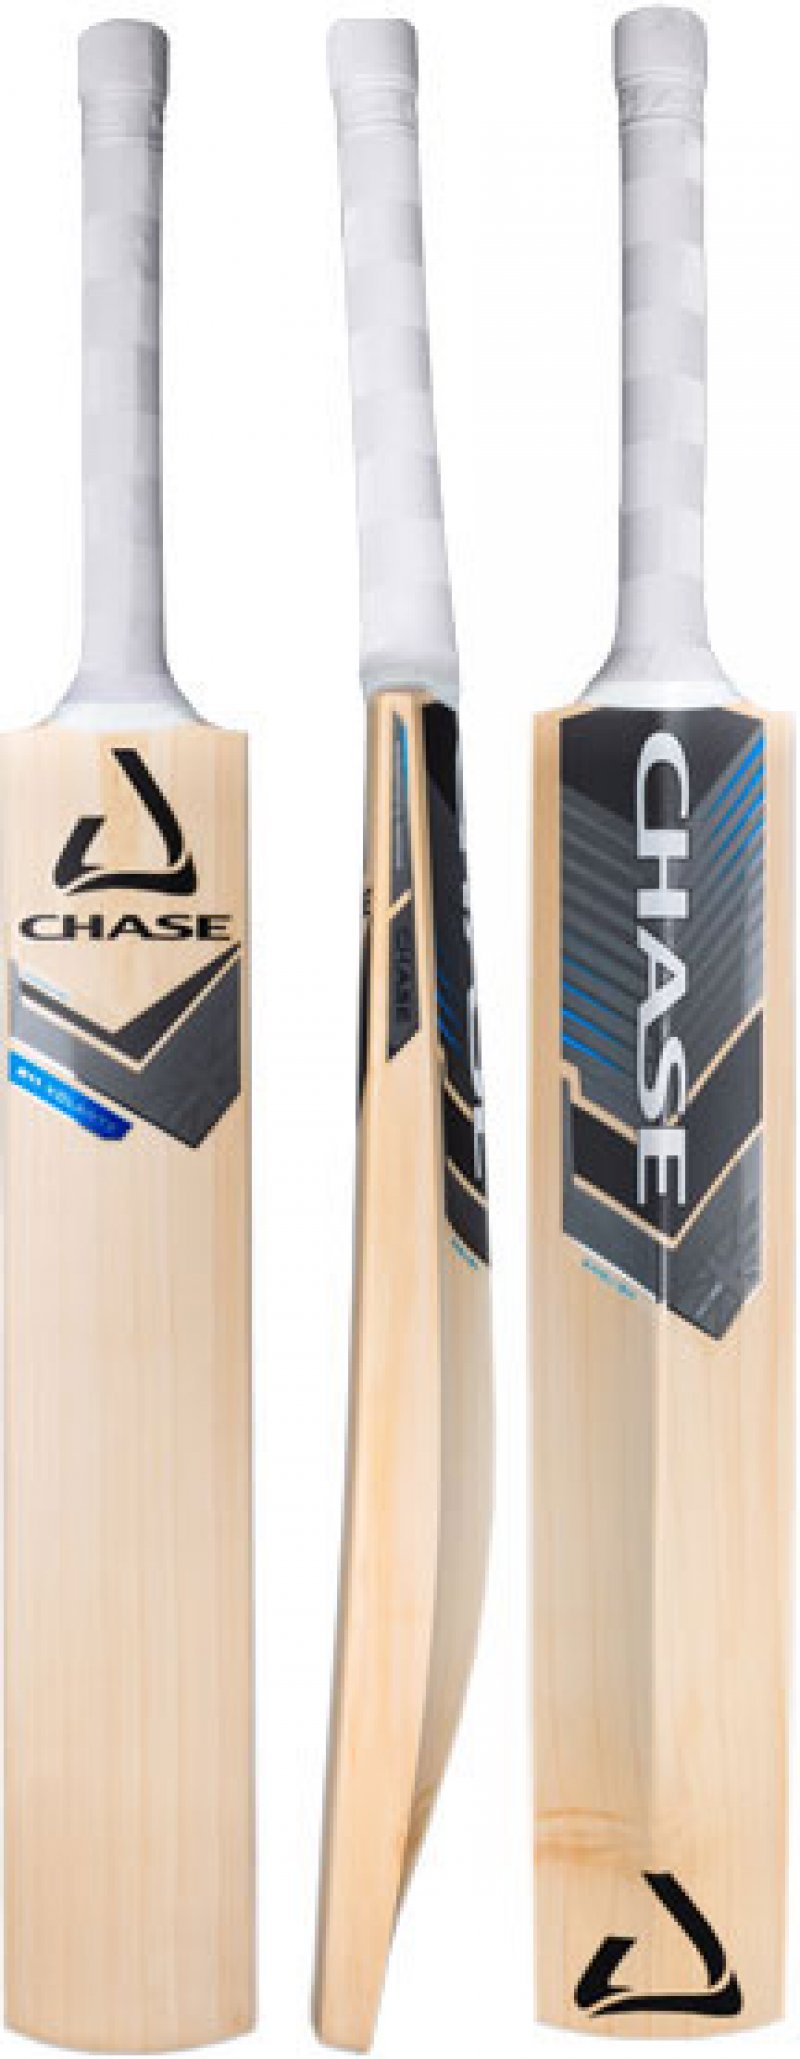 Chase Volante R7 Cricket Bat